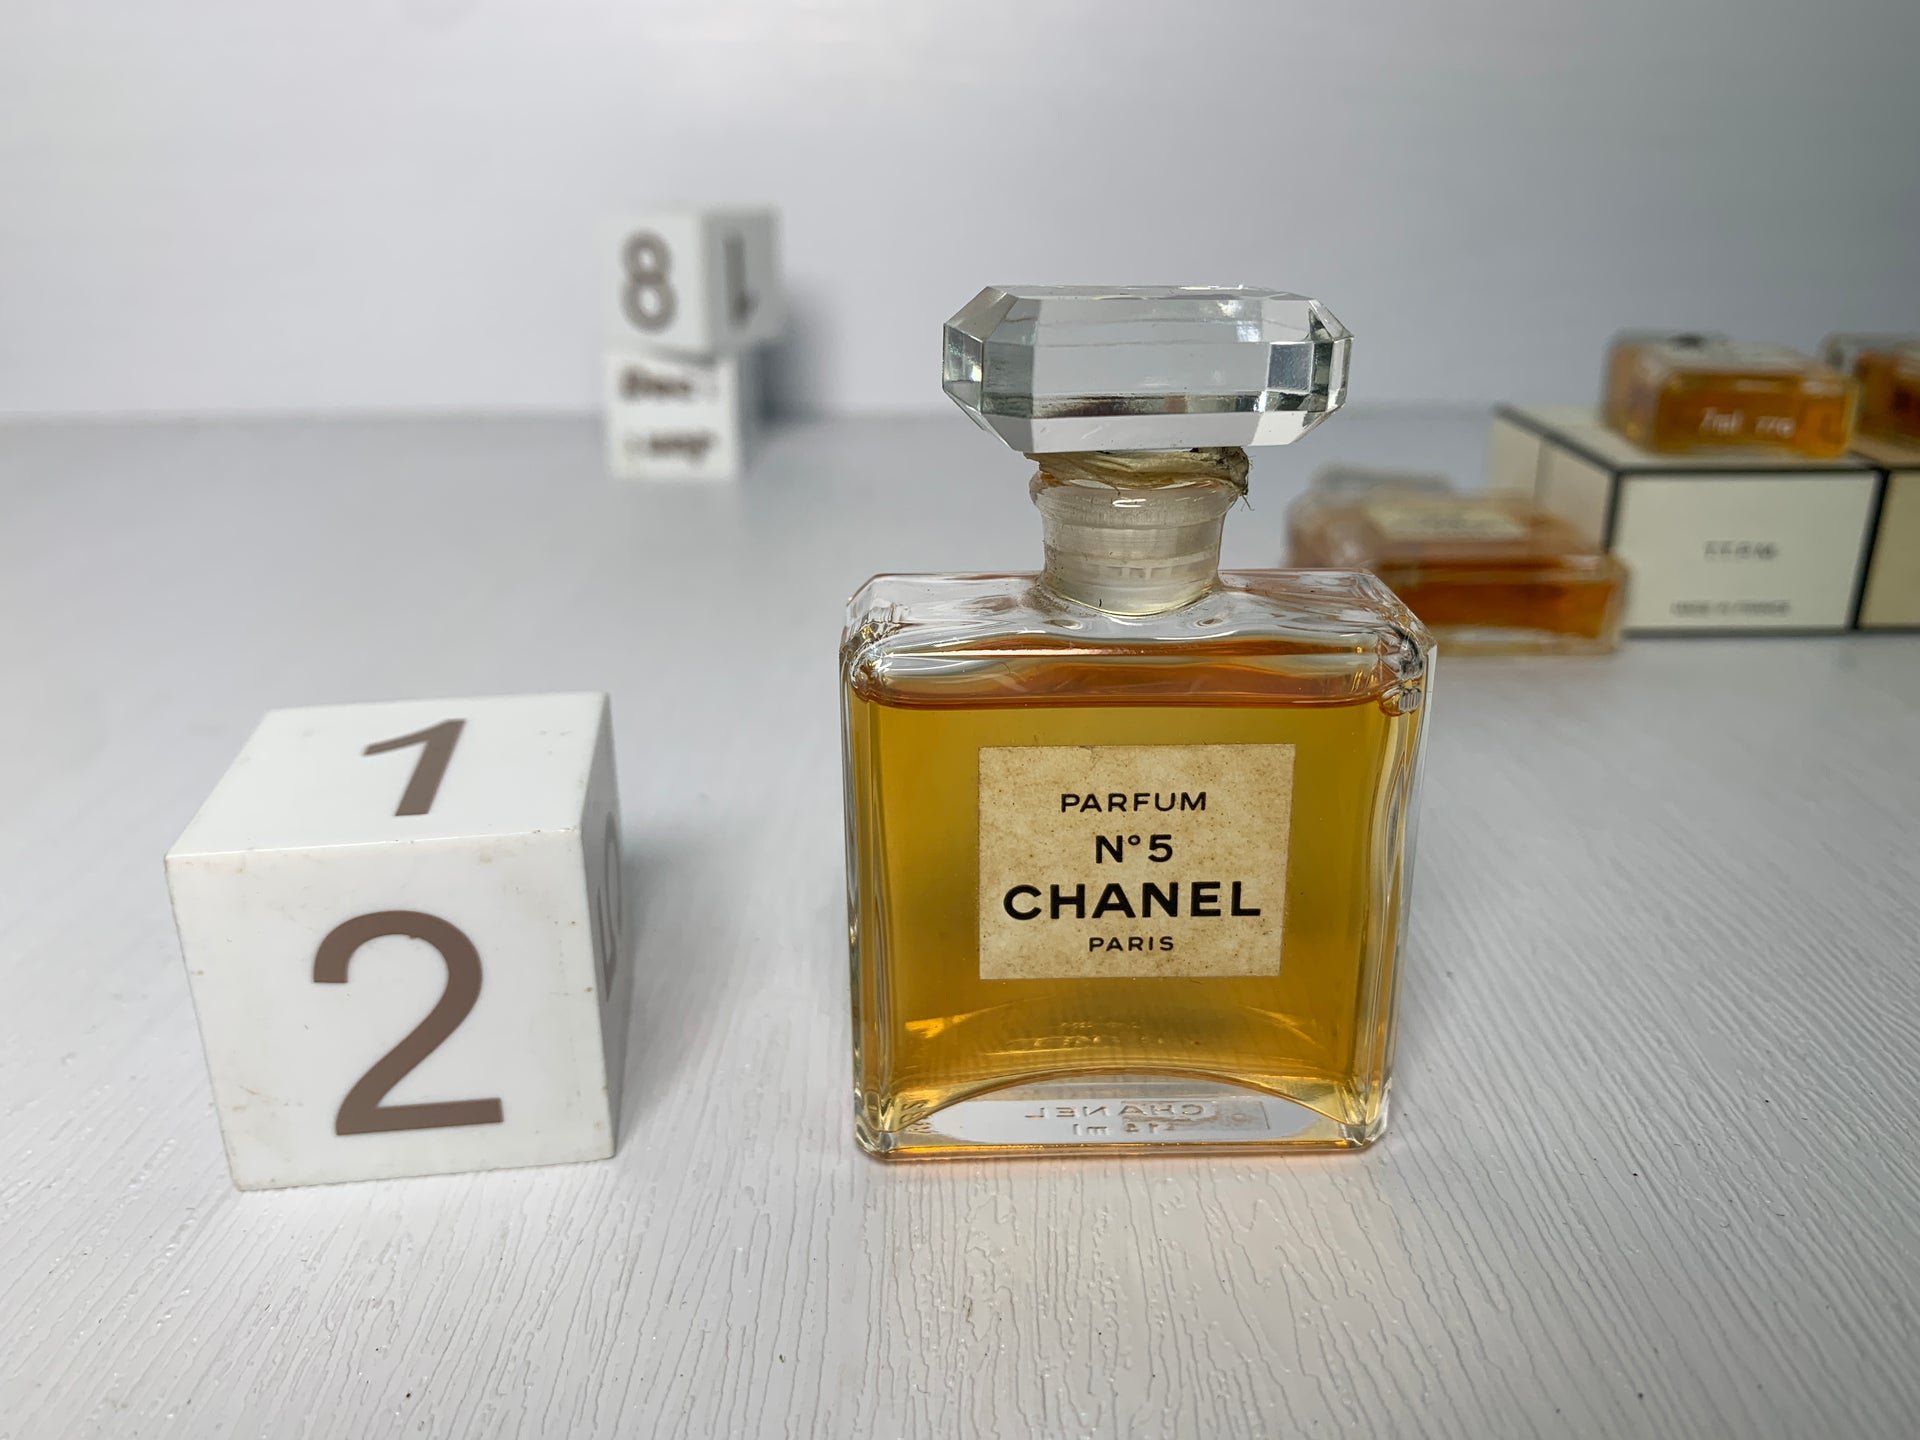 chanel no 5 new perfume bottle